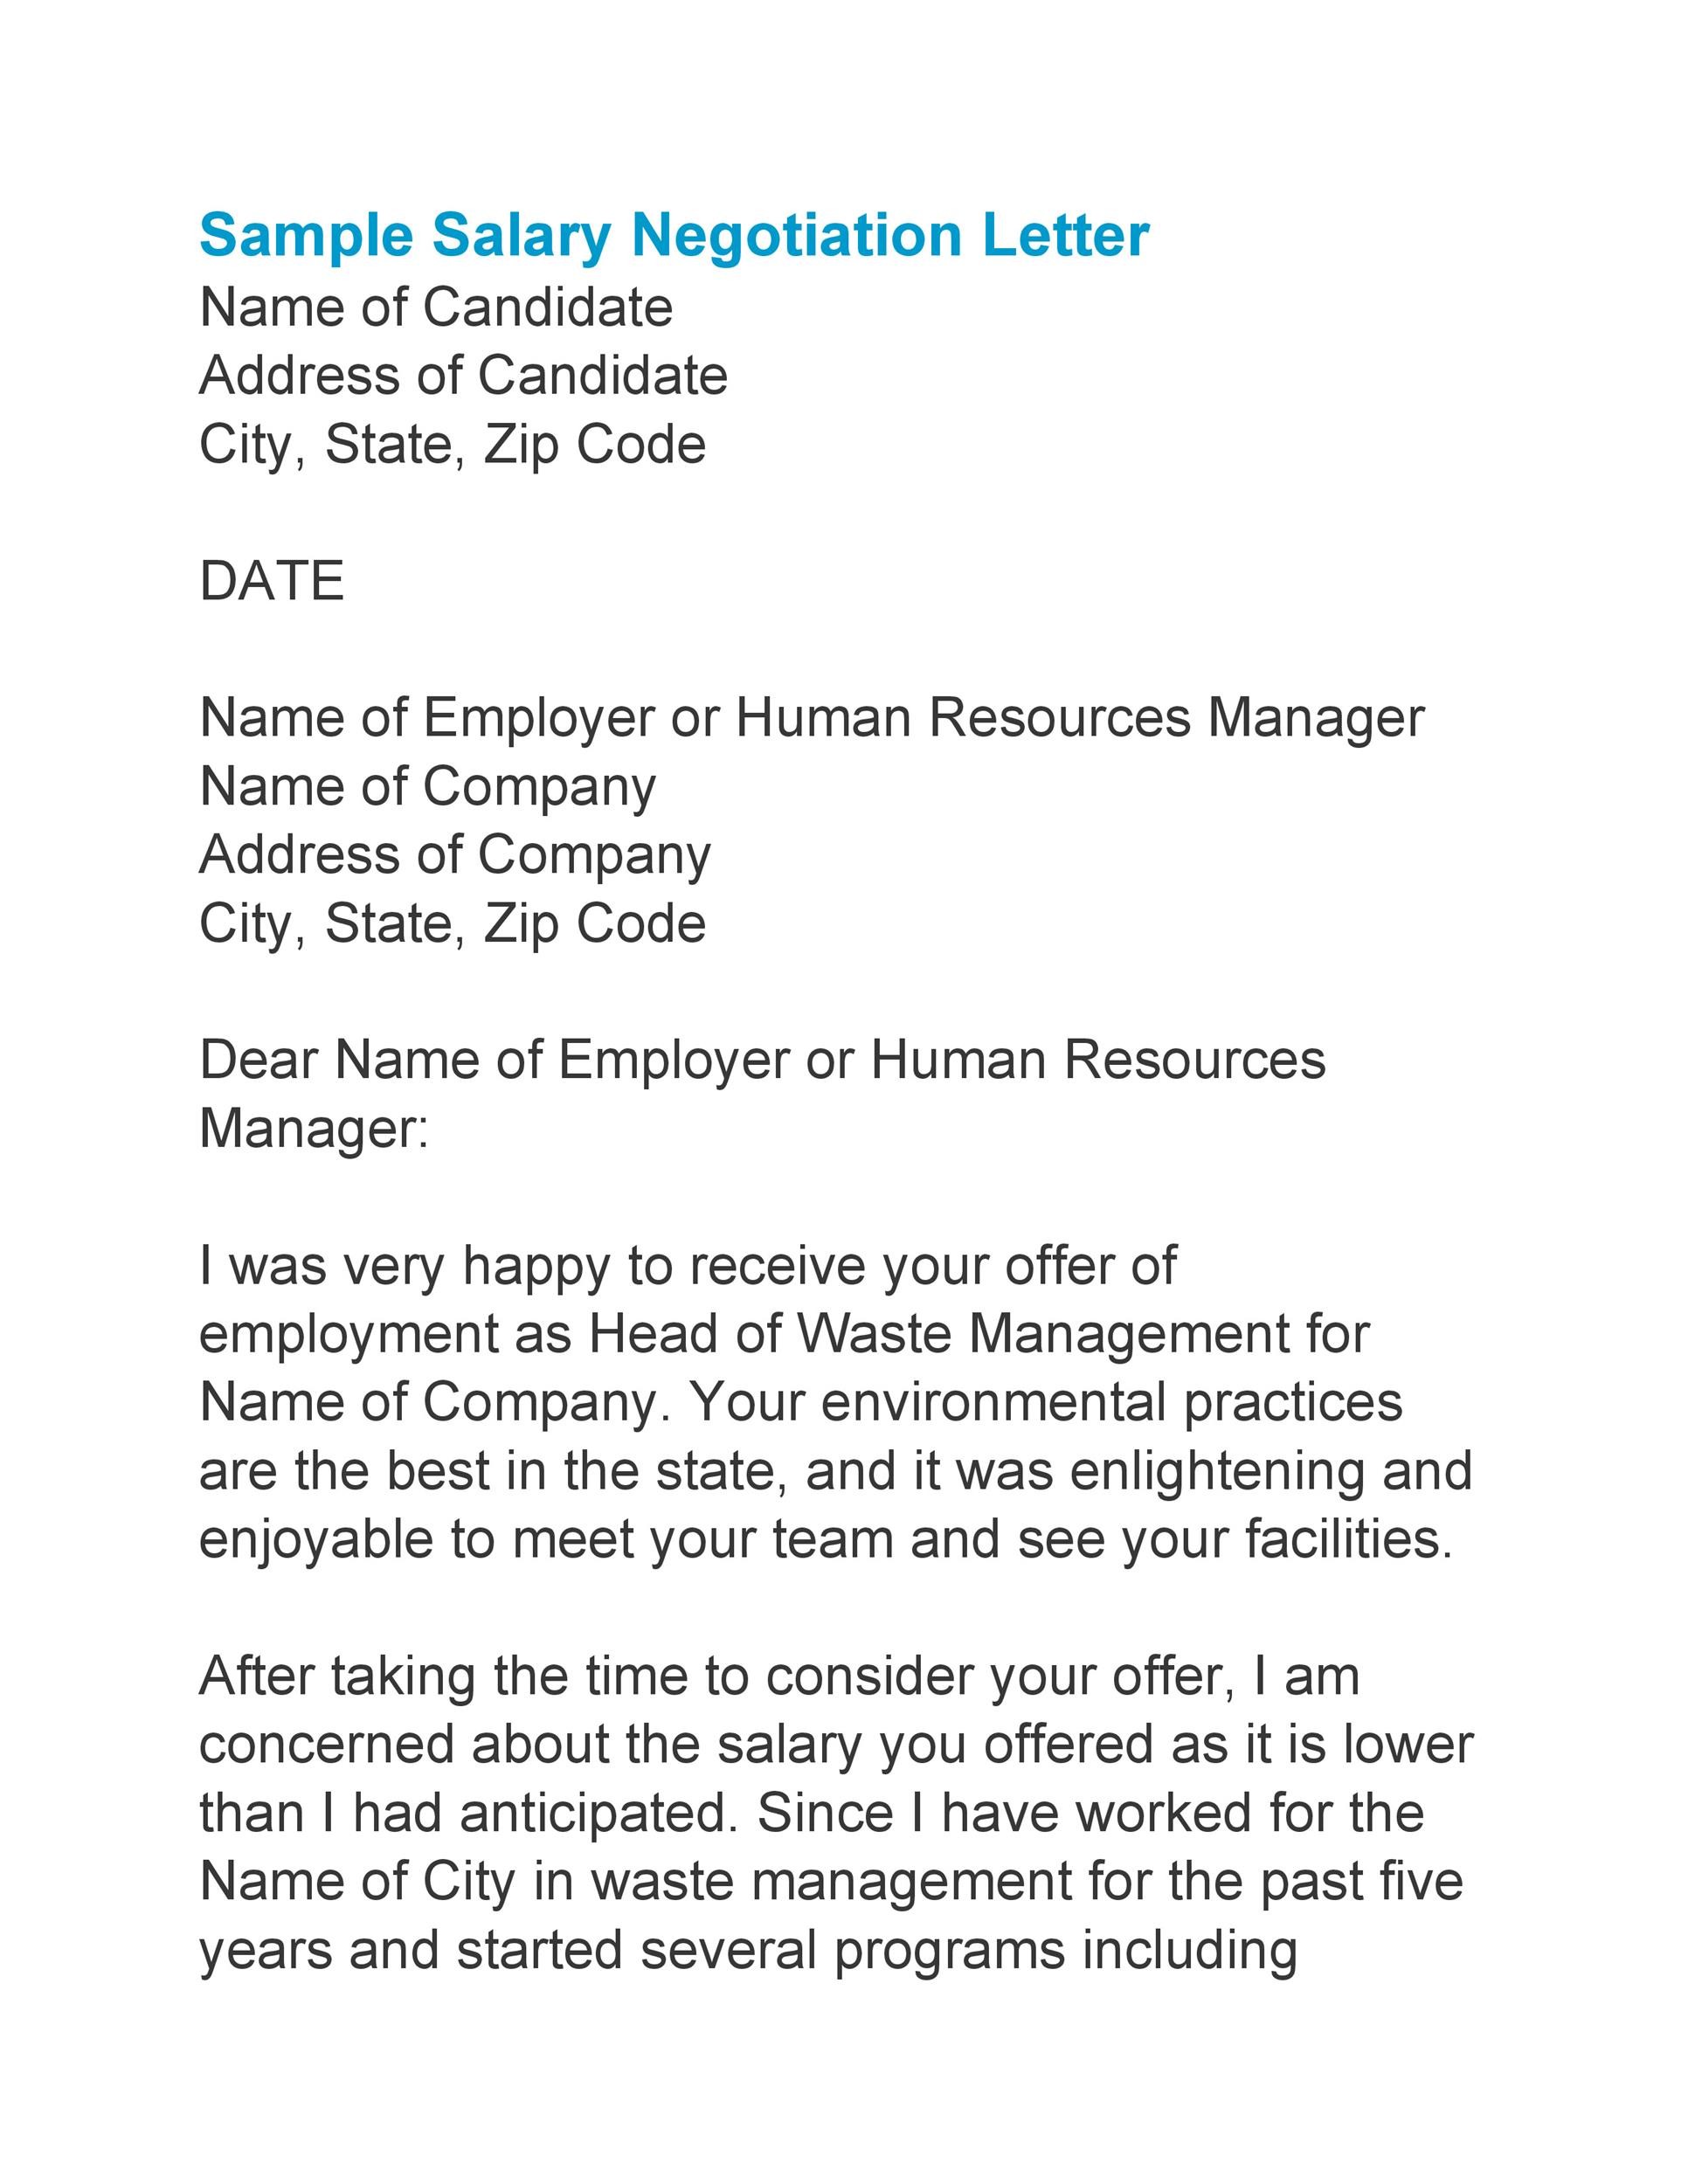 sample letter accepting job offer after salary negotiation